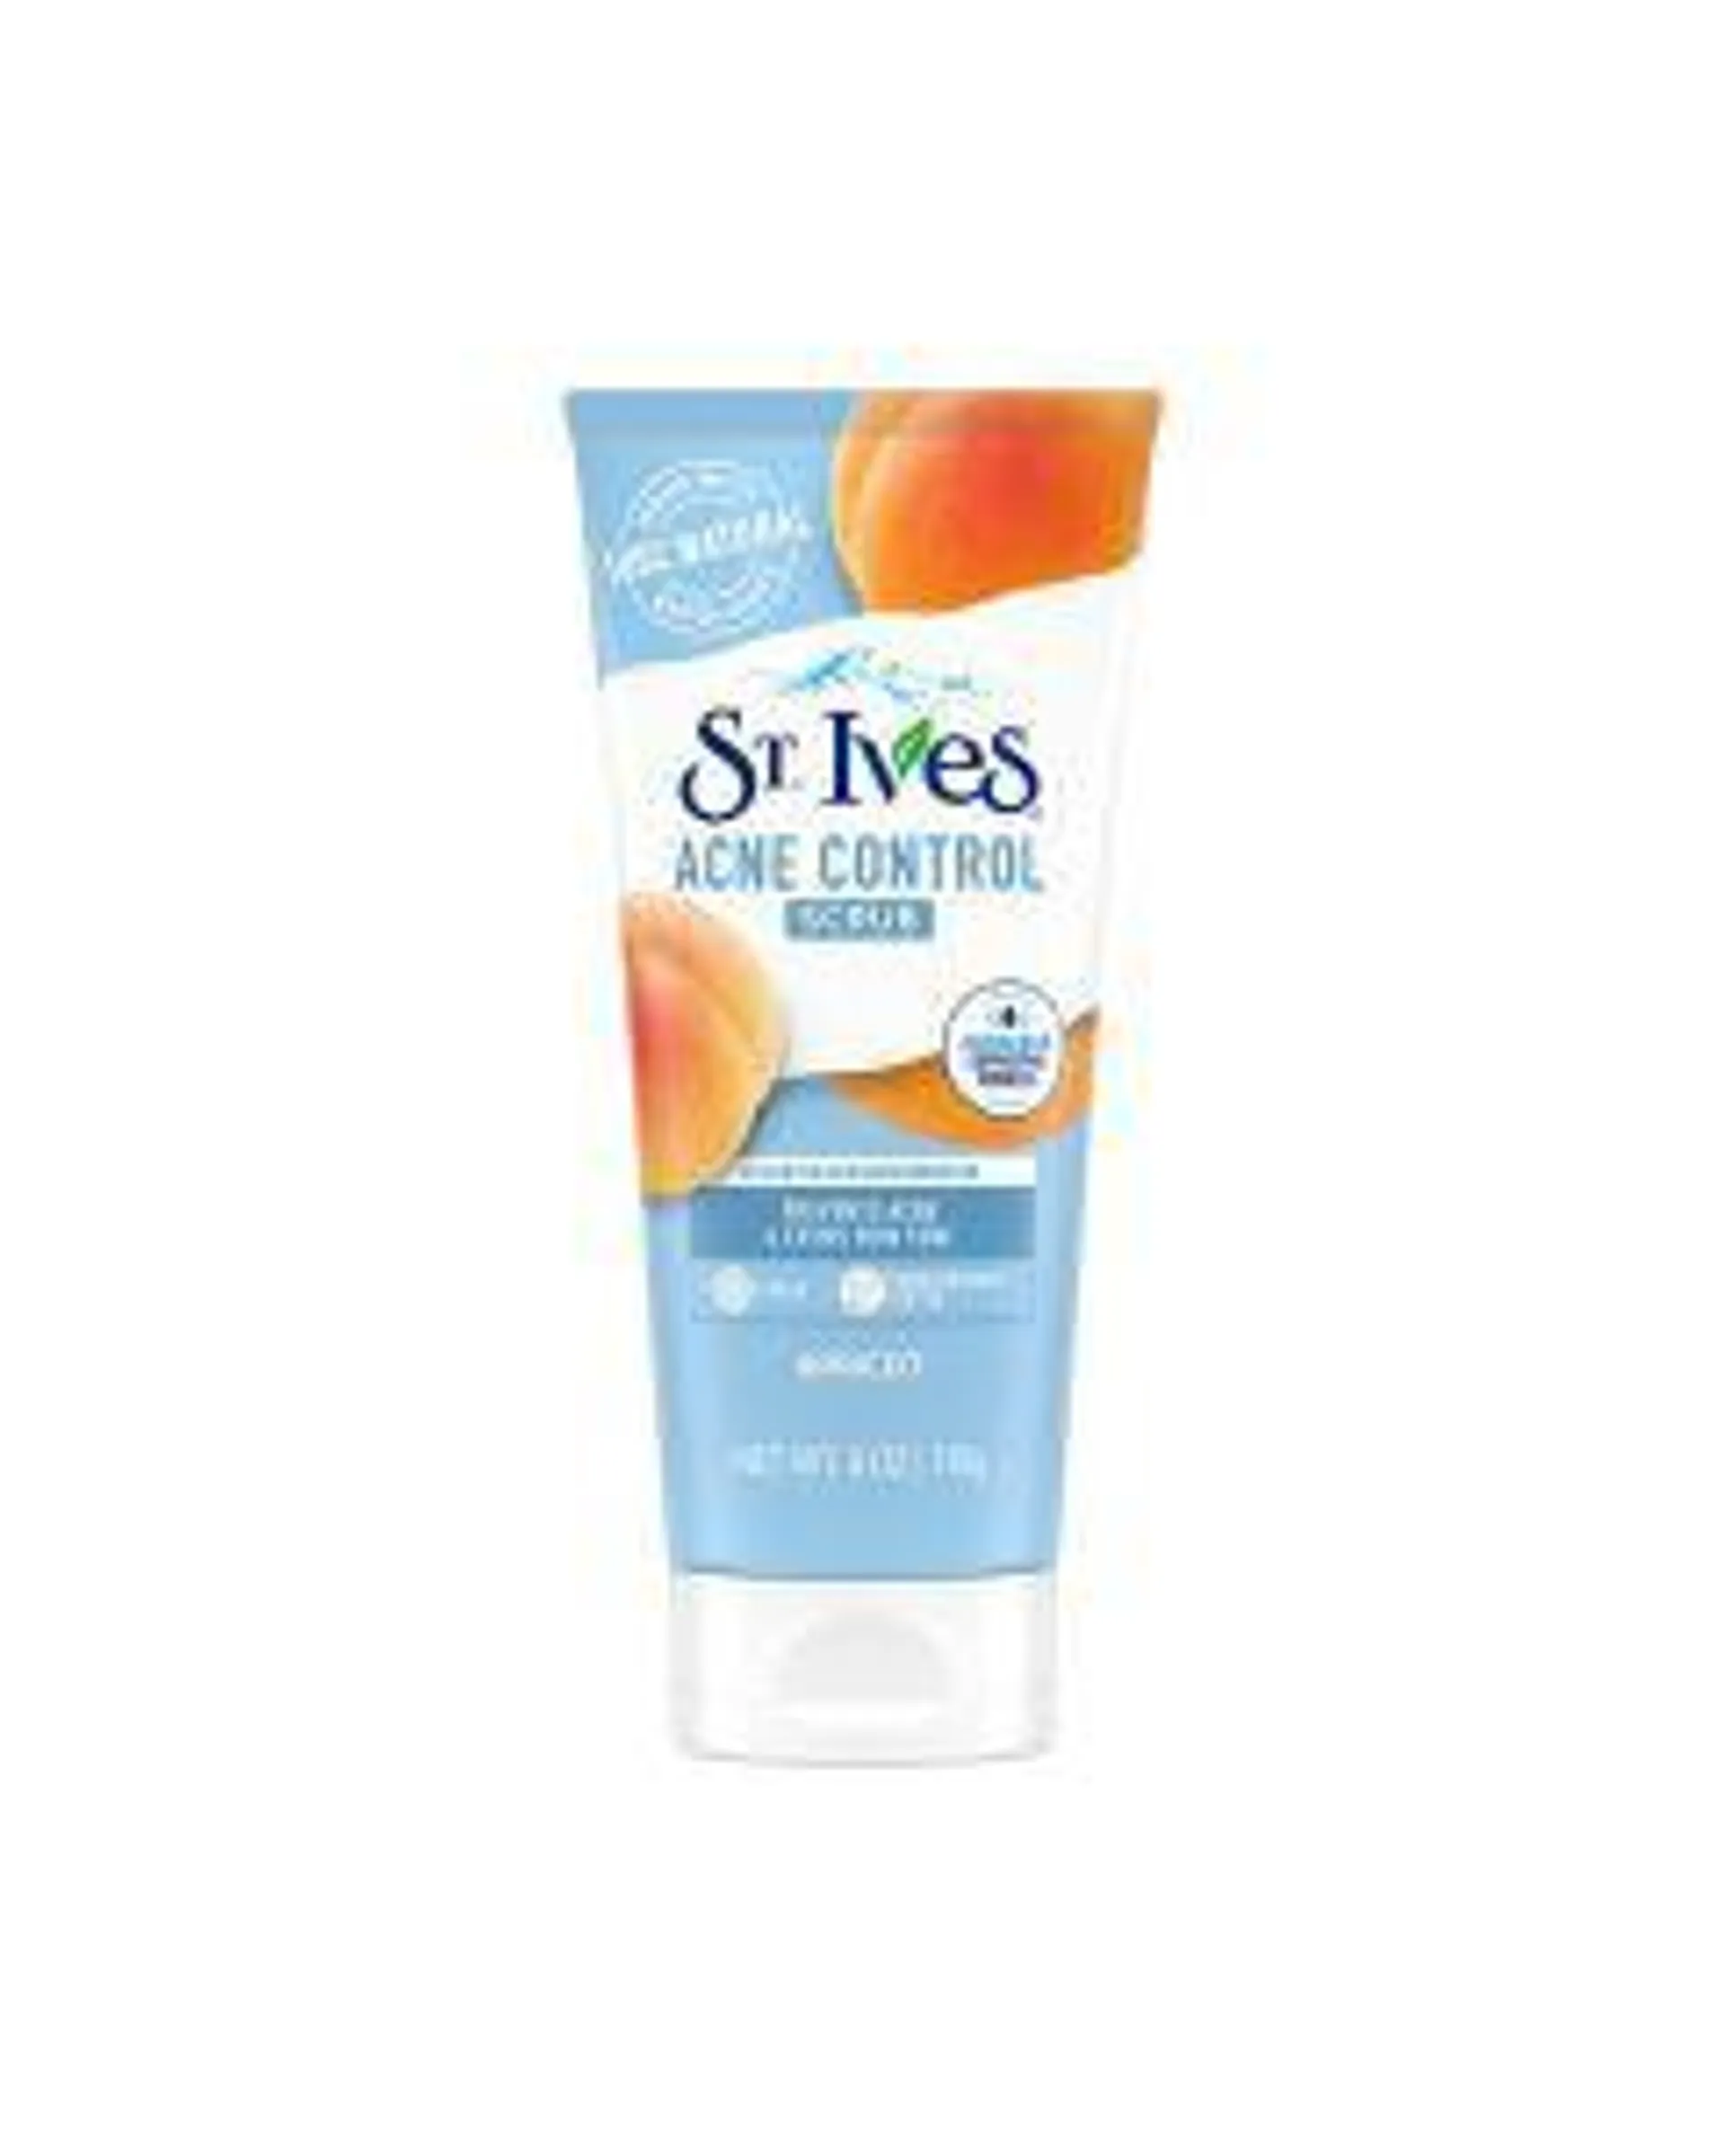 St. Ives Acne Control Face Scrub Apricot 6 Oz